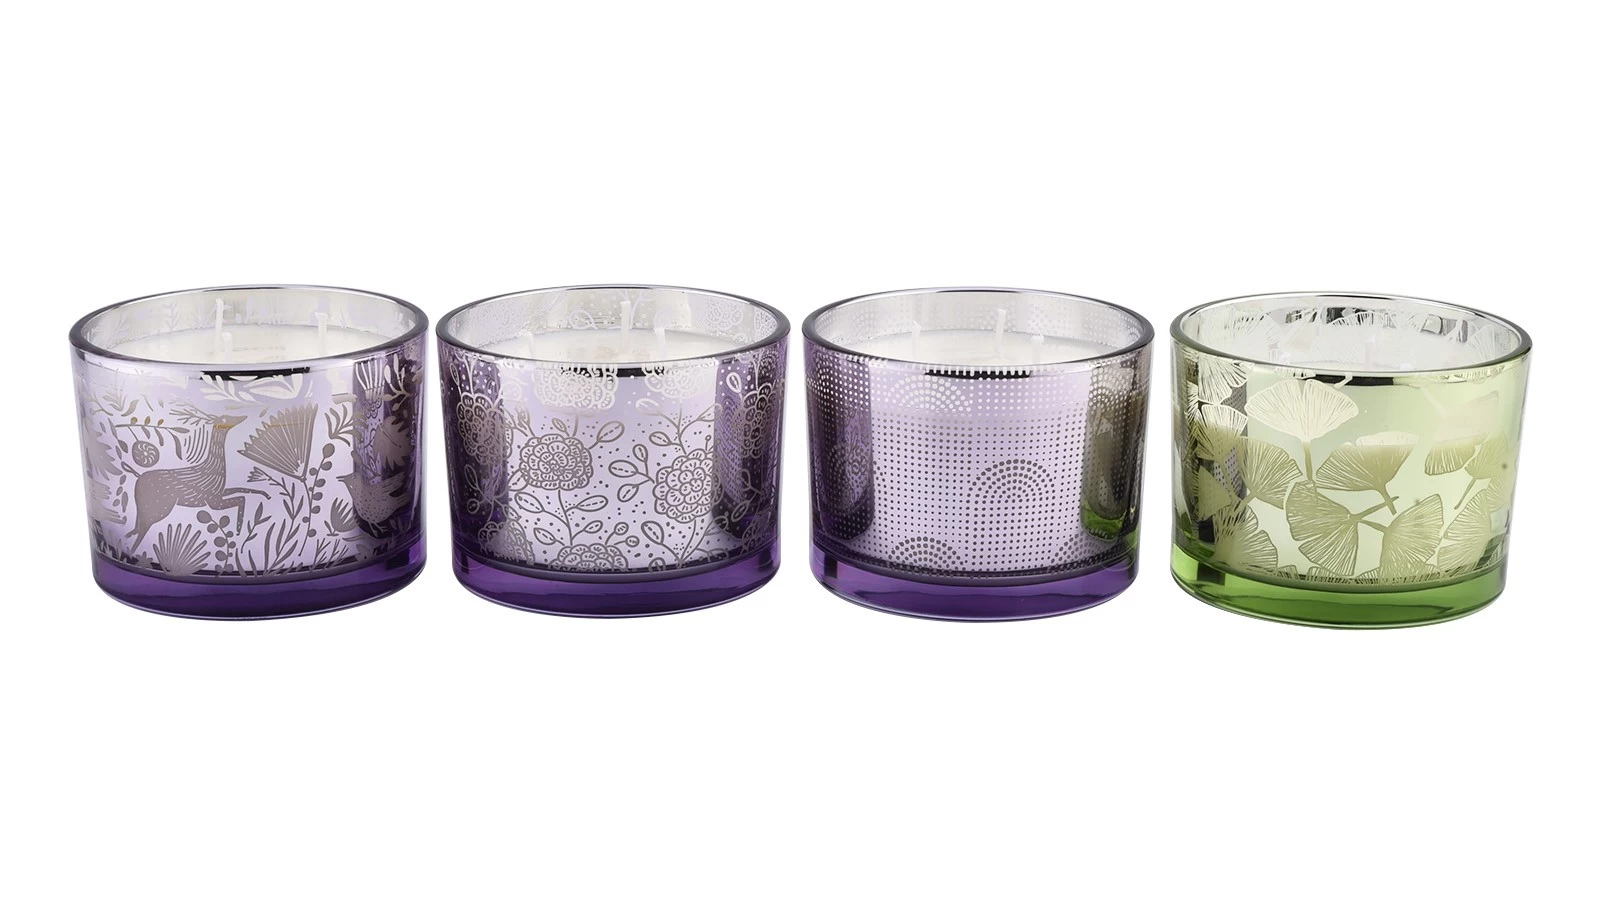 Custom 500ml three-core purple polka dot geometric design glass candle jar